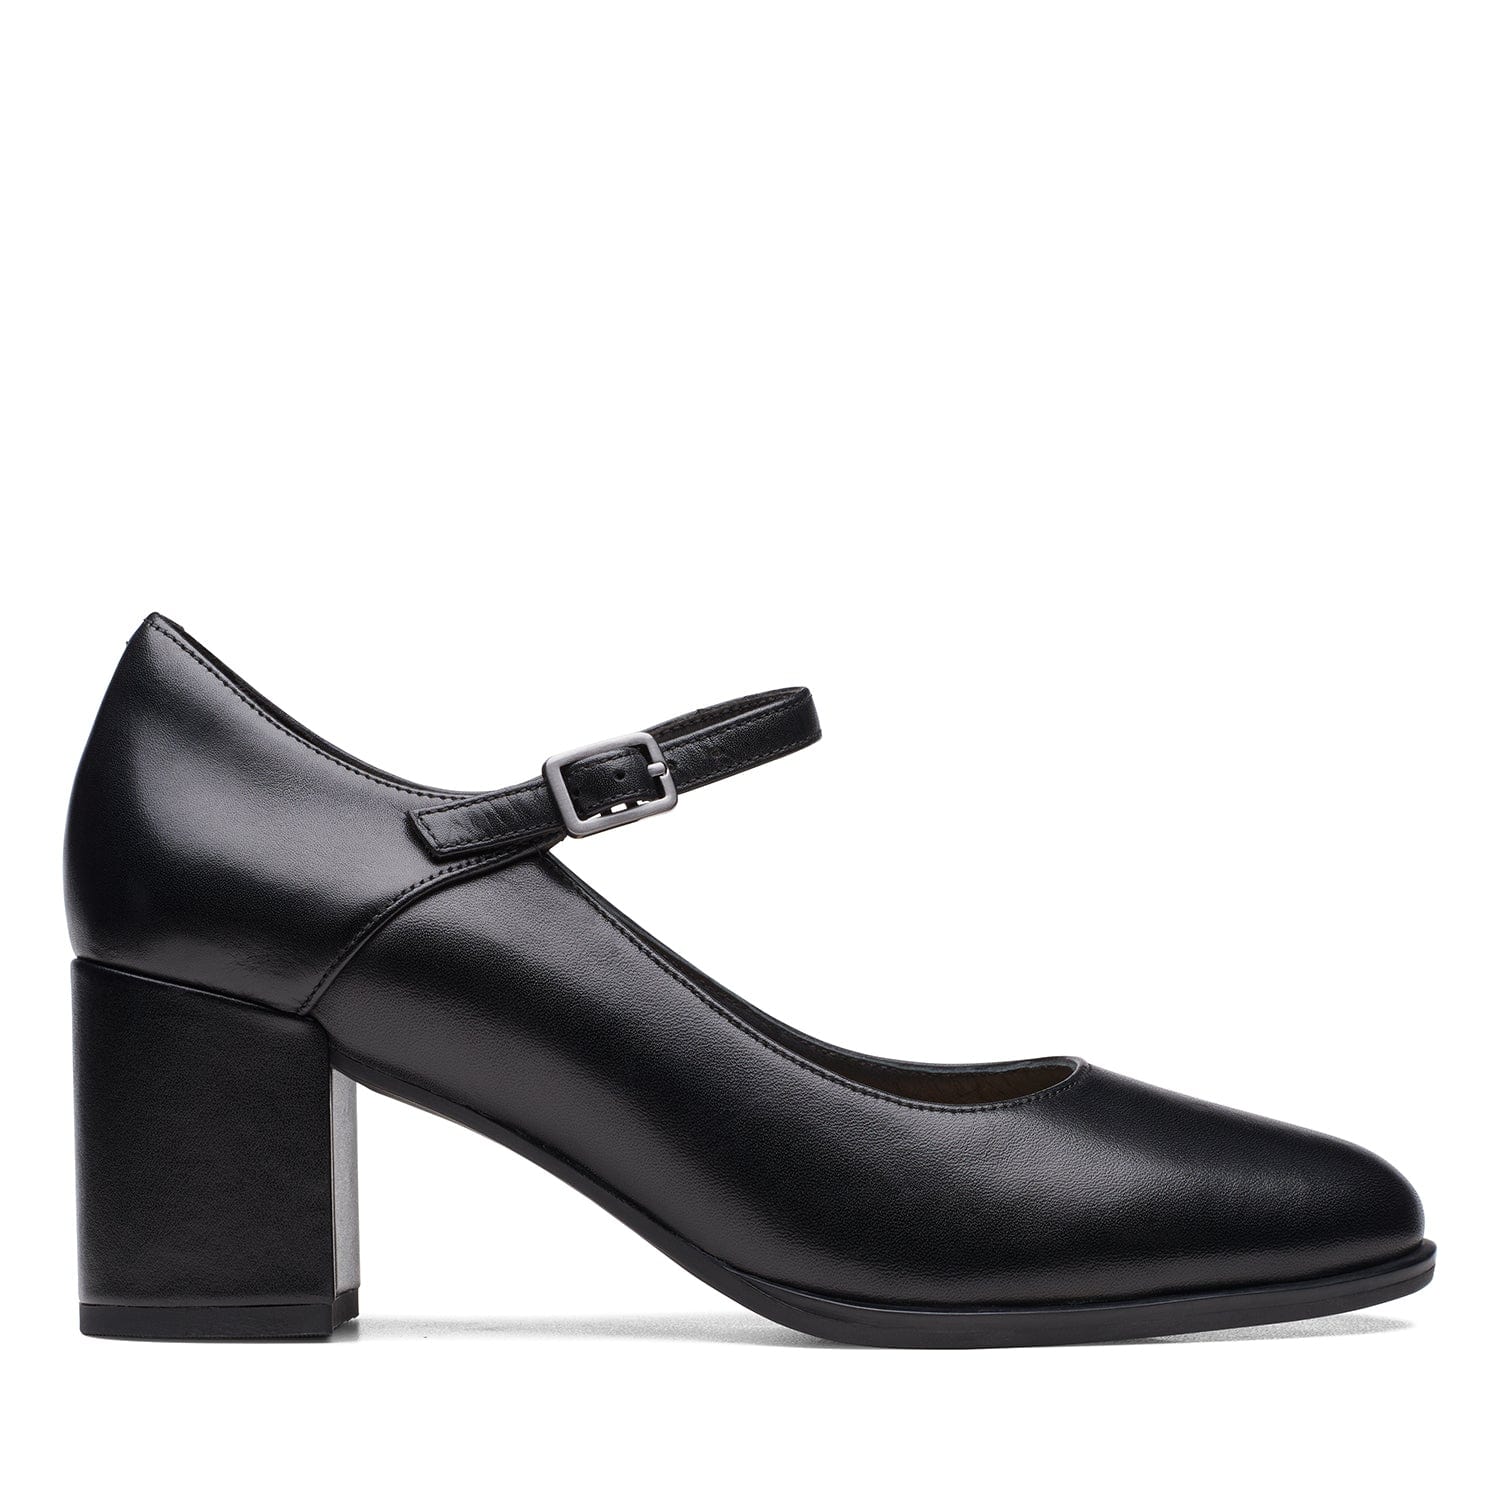 Clarks Freva55 Strap Shoes - Black Leather - 261720525 - E Width (Wide Fit)